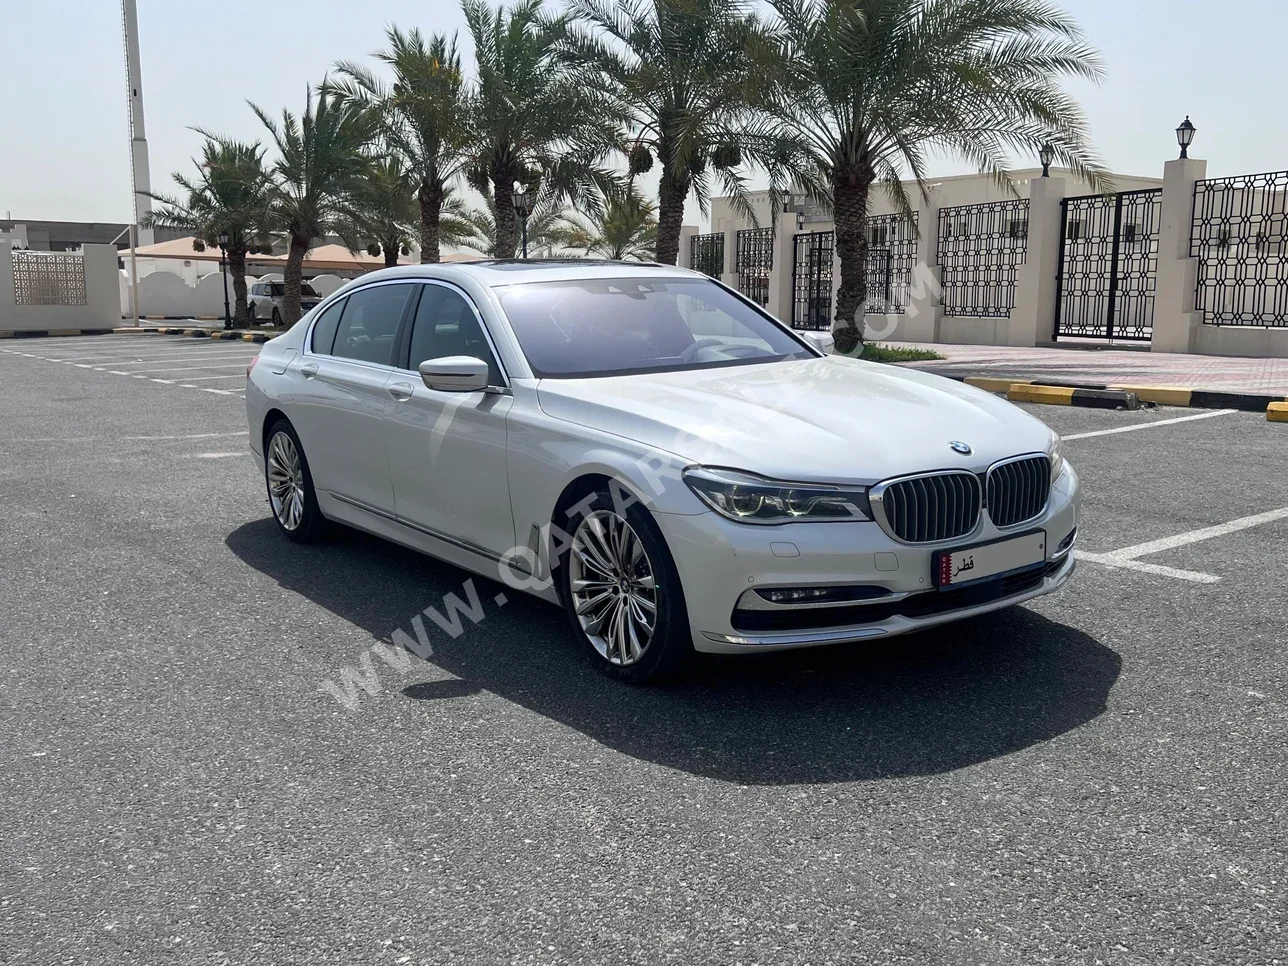  BMW  7-Series  740 Li  2016  Automatic  141,000 Km  6 Cylinder  Rear Wheel Drive (RWD)  Sedan  White  With Warranty